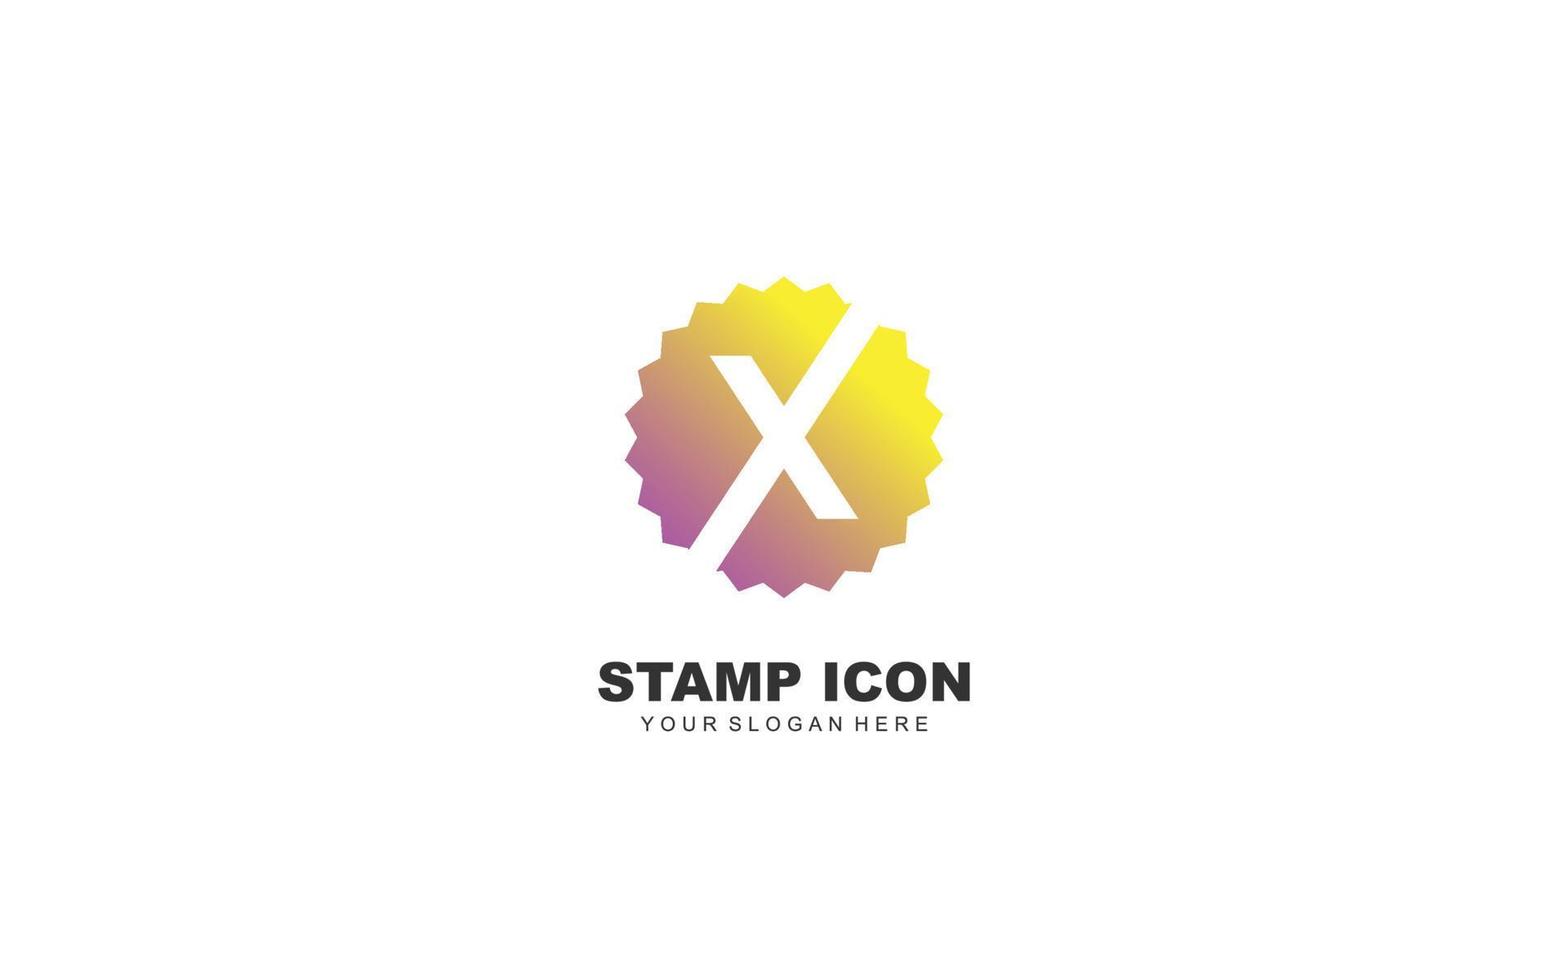 X Stamp logo design inspiration. Vector letter template design for brand.